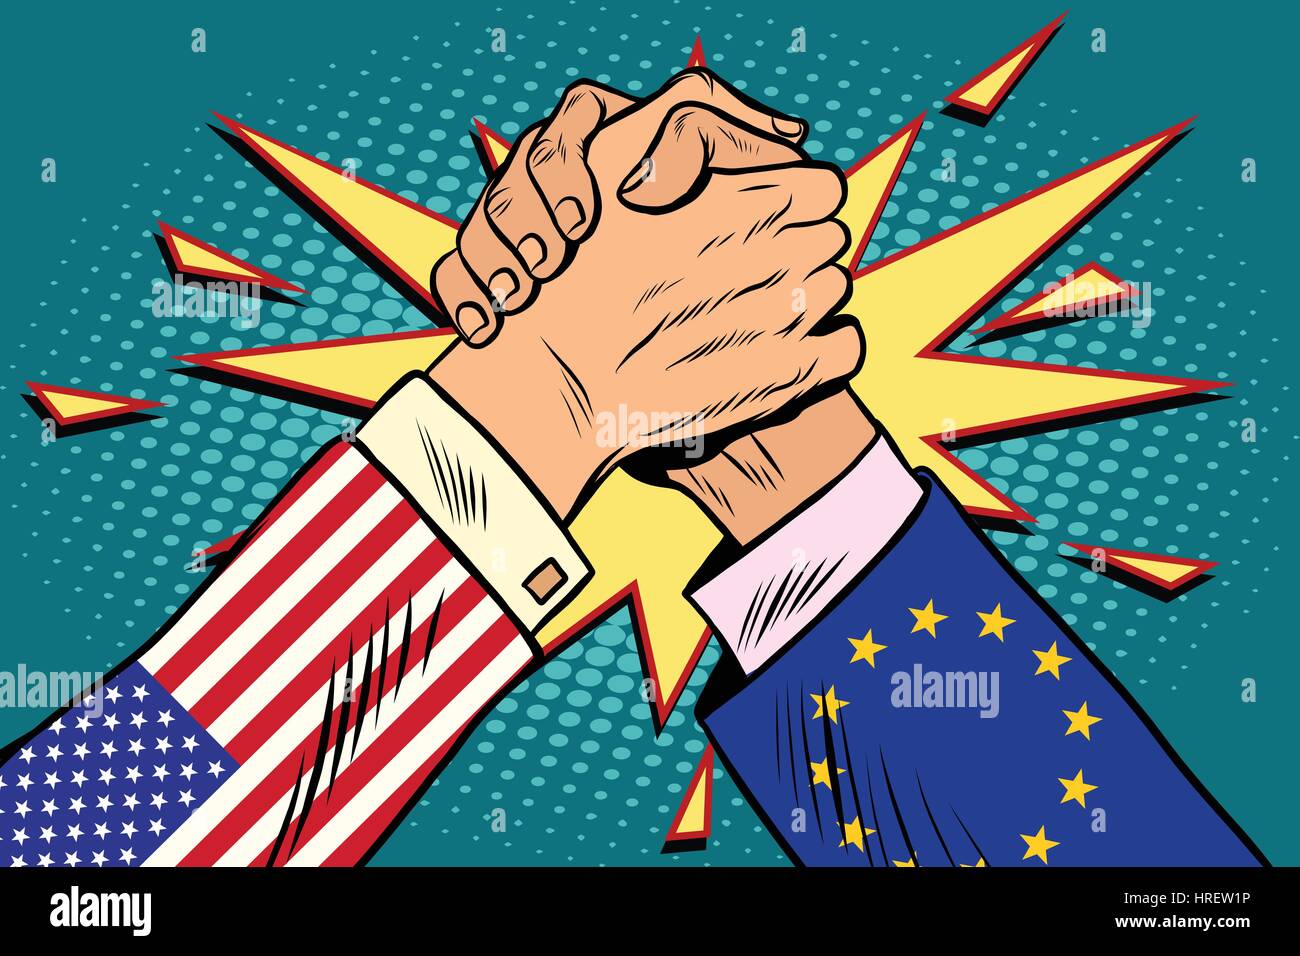 USA Vs EU Politik und Wettbewerb, Armdrücken Kampf Konfrontation, Pop Art Retro-Vektor-illustration Stock Vektor